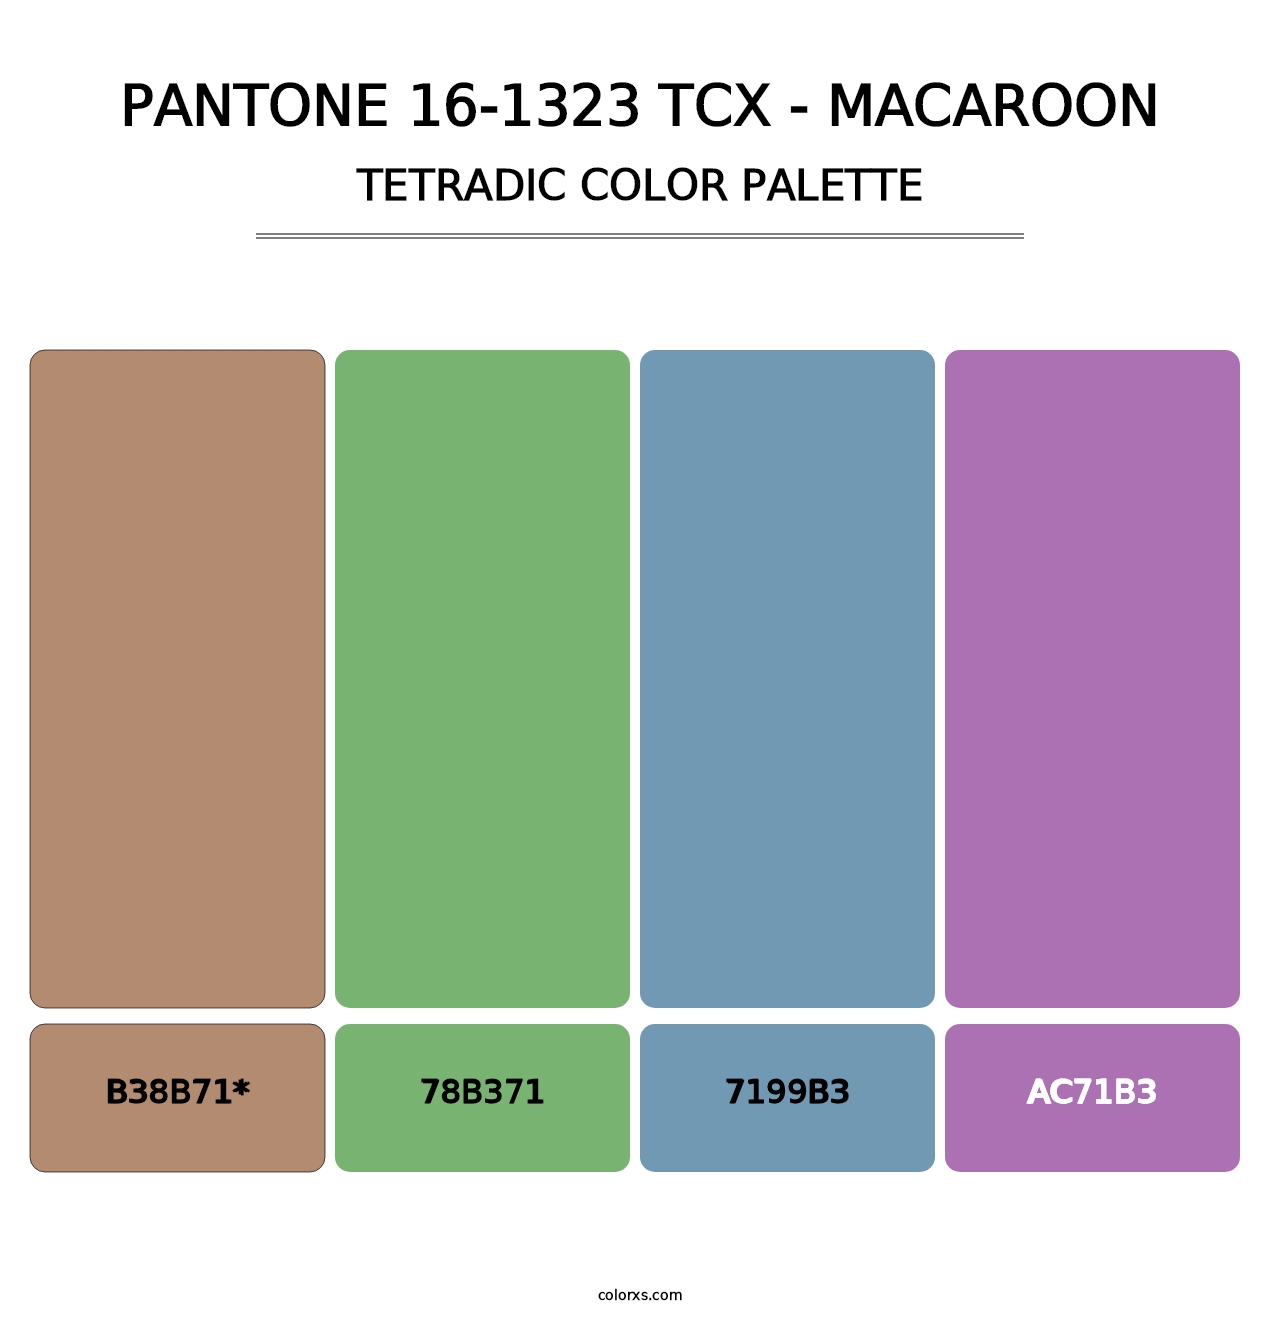 PANTONE 16-1323 TCX - Macaroon - Tetradic Color Palette